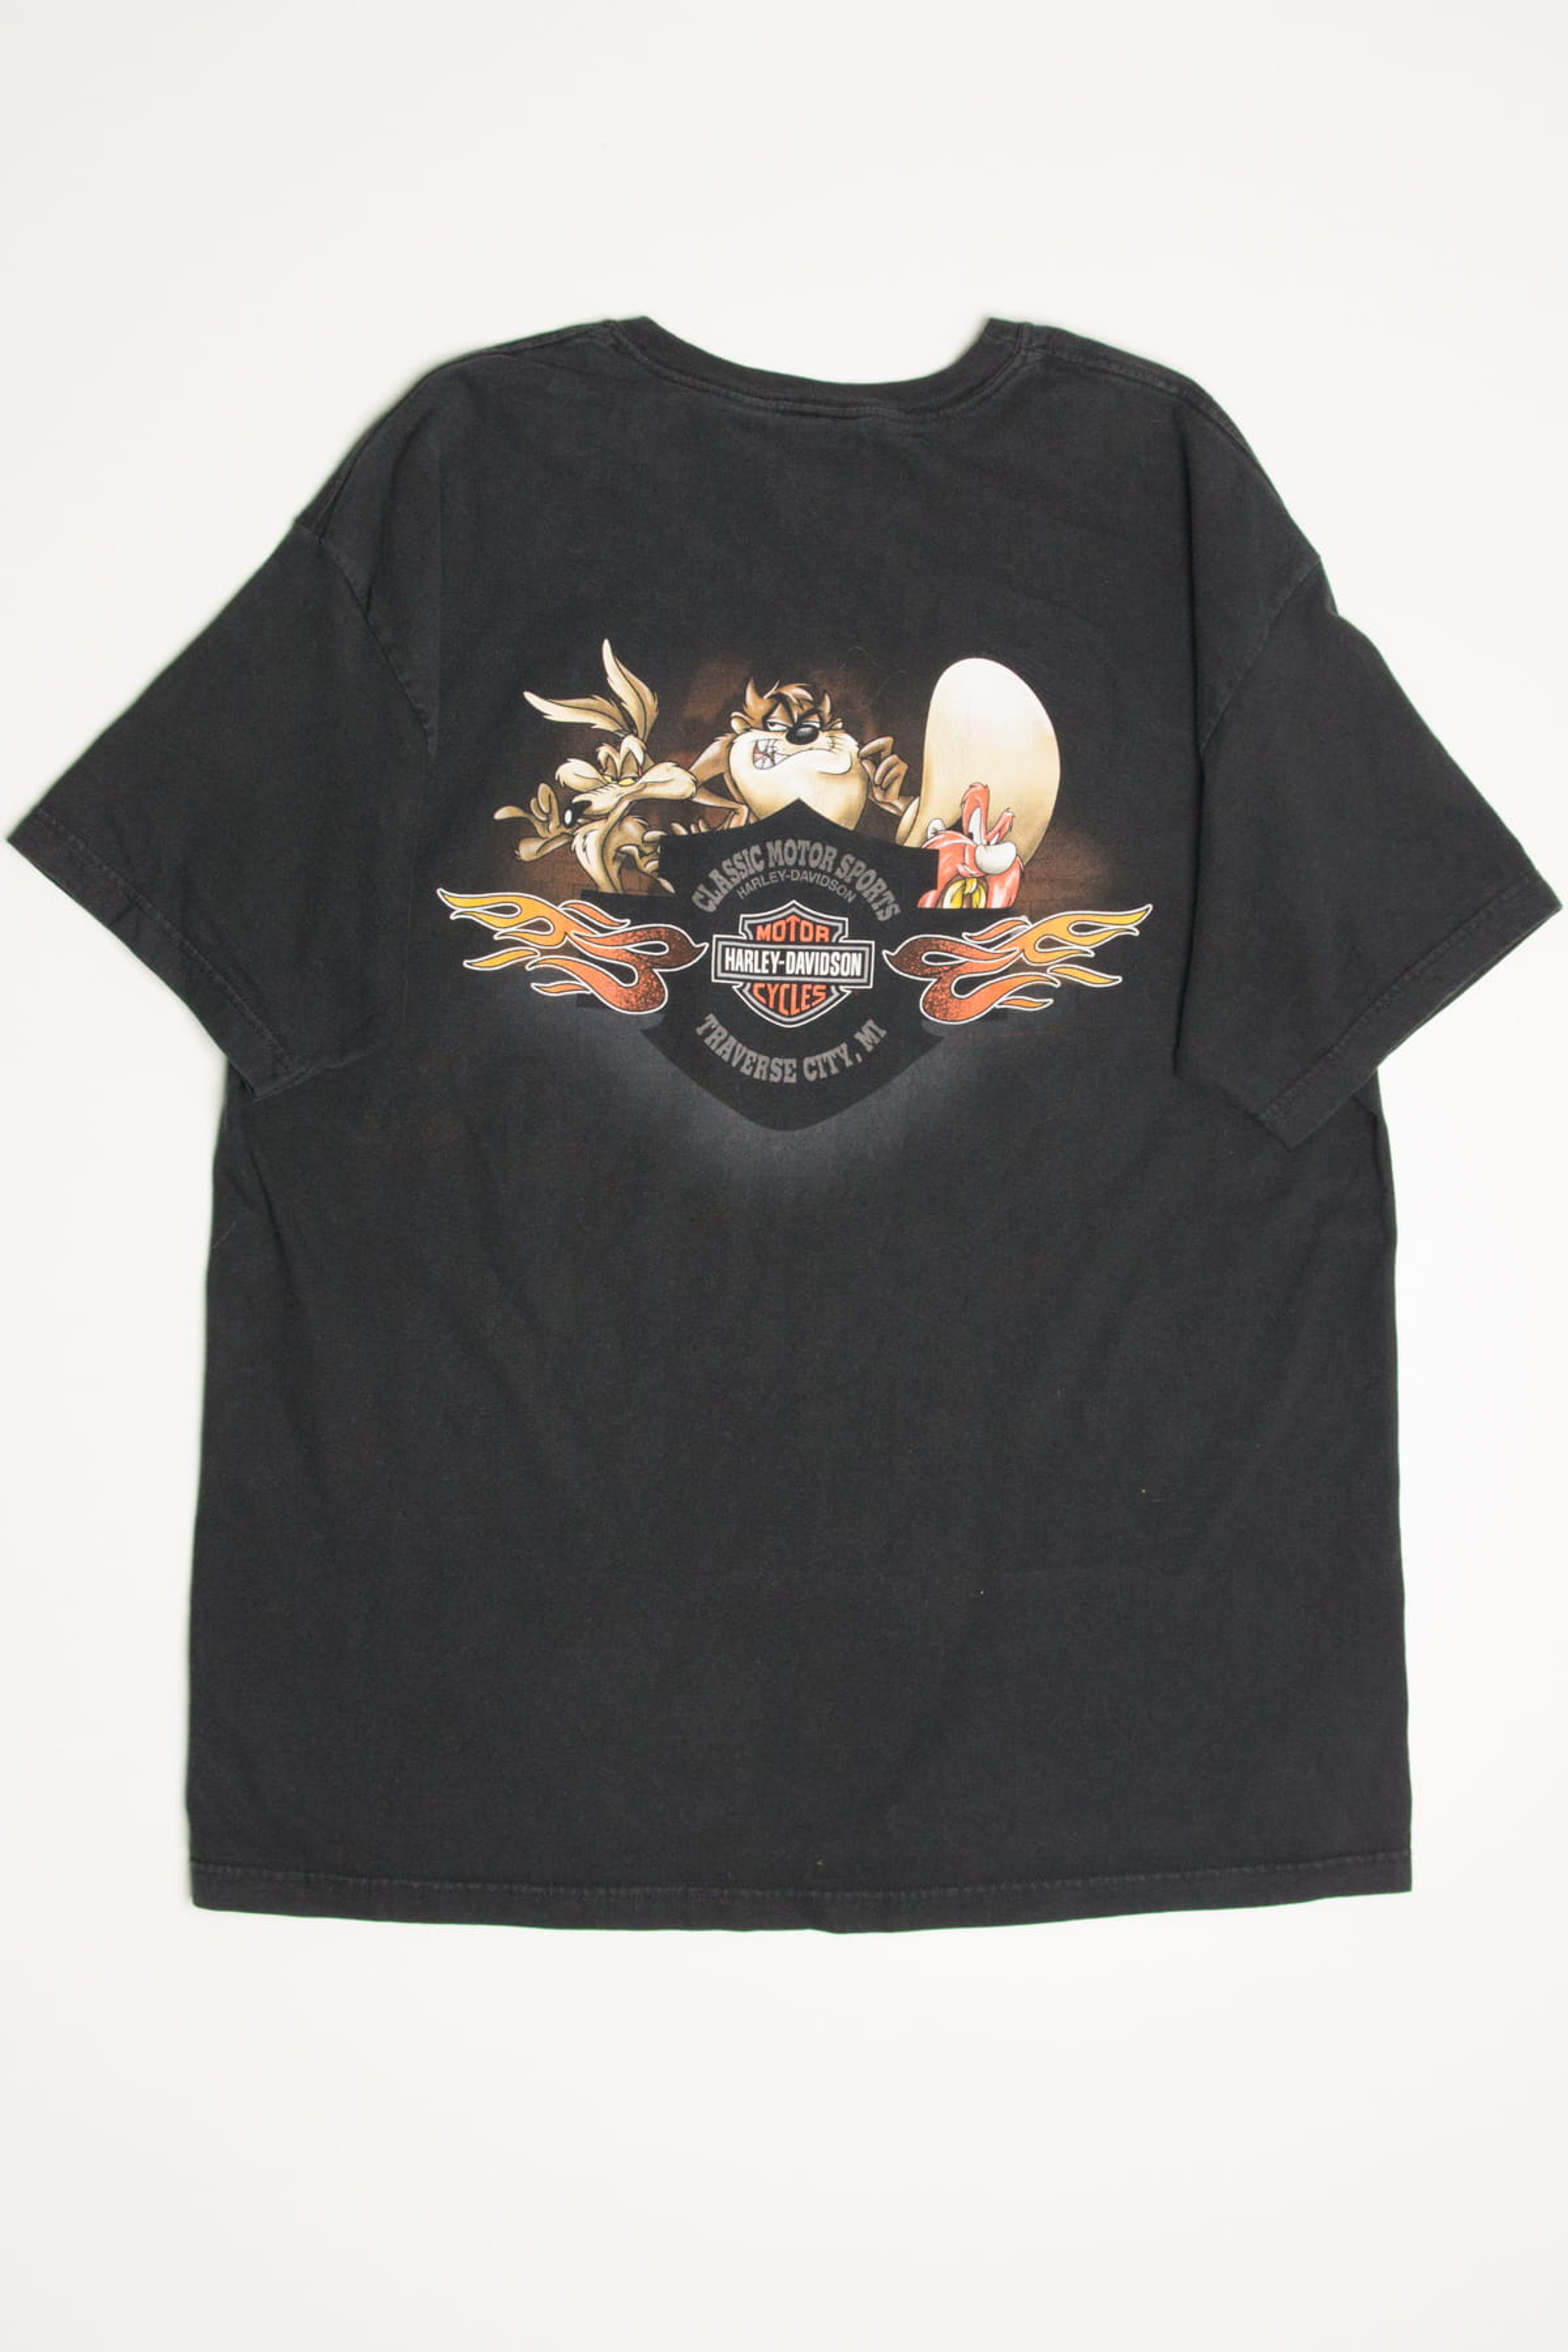 Traverse City Looney Tunes Harley-Davidson T-Shirt - Ragstock.com